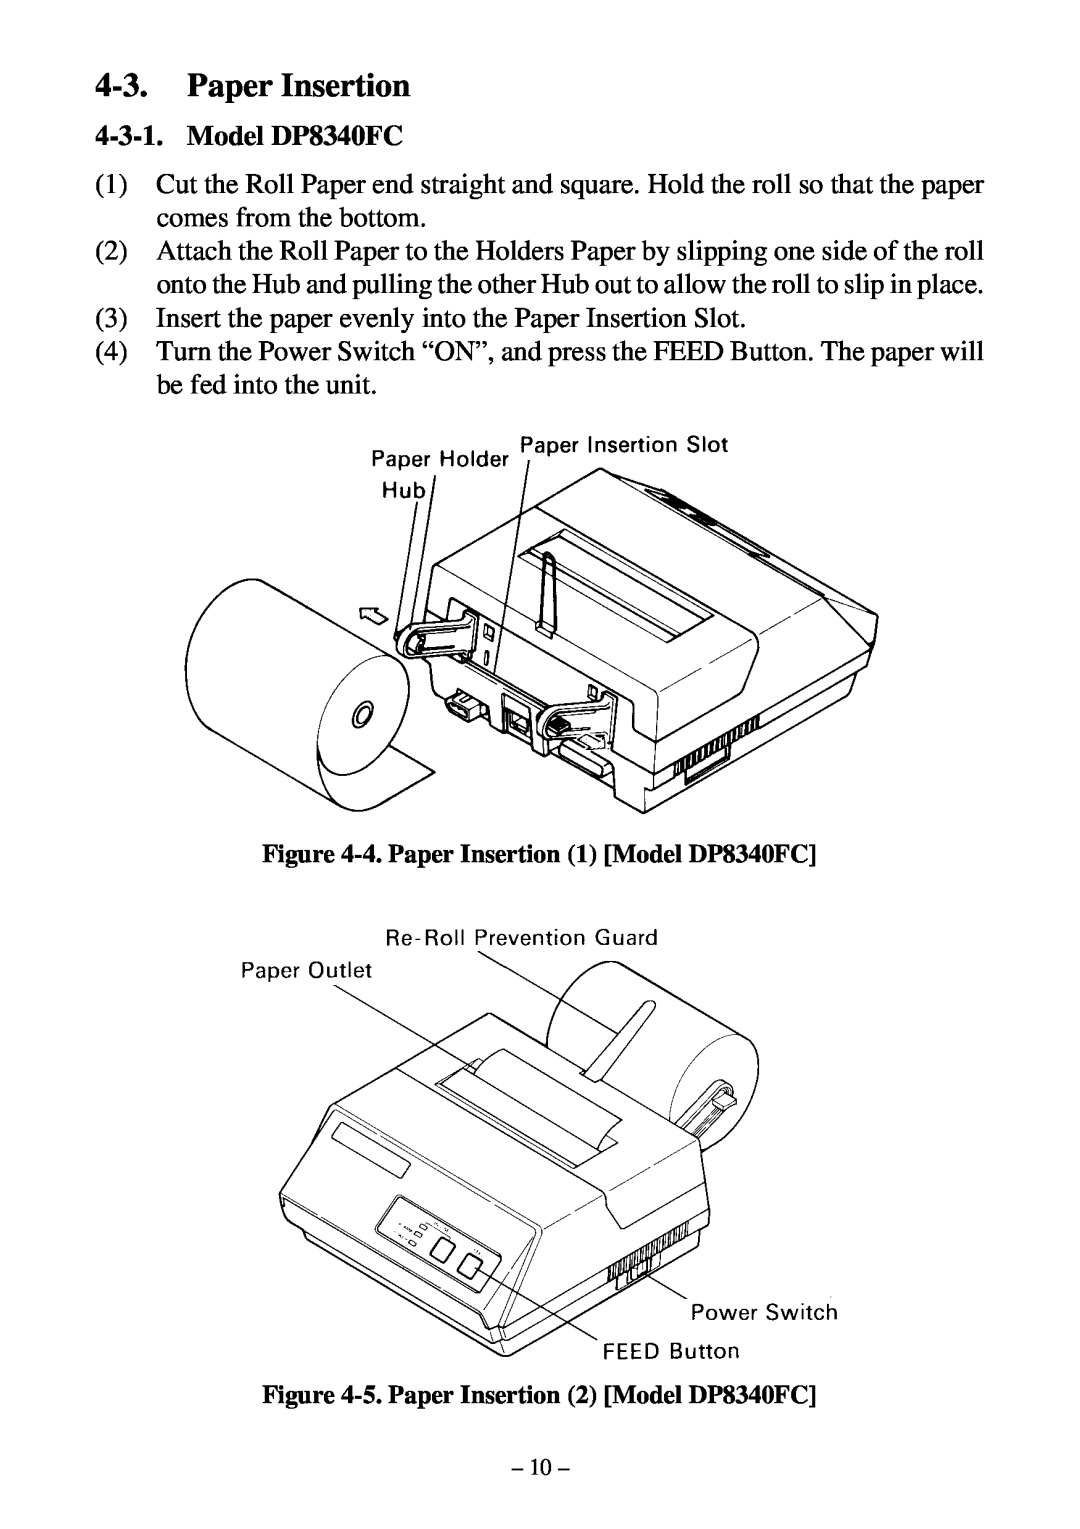 Star Micronics user manual Paper Insertion, Model DP8340FC 